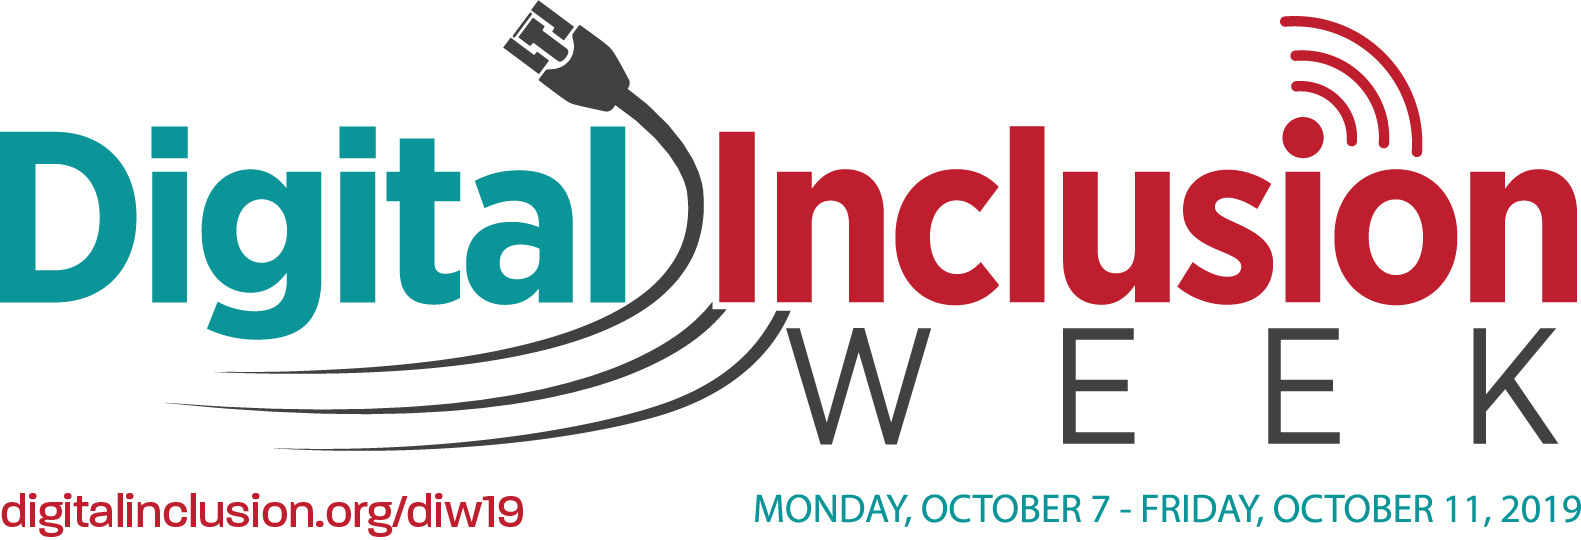 Digital Inclusion Week web banner